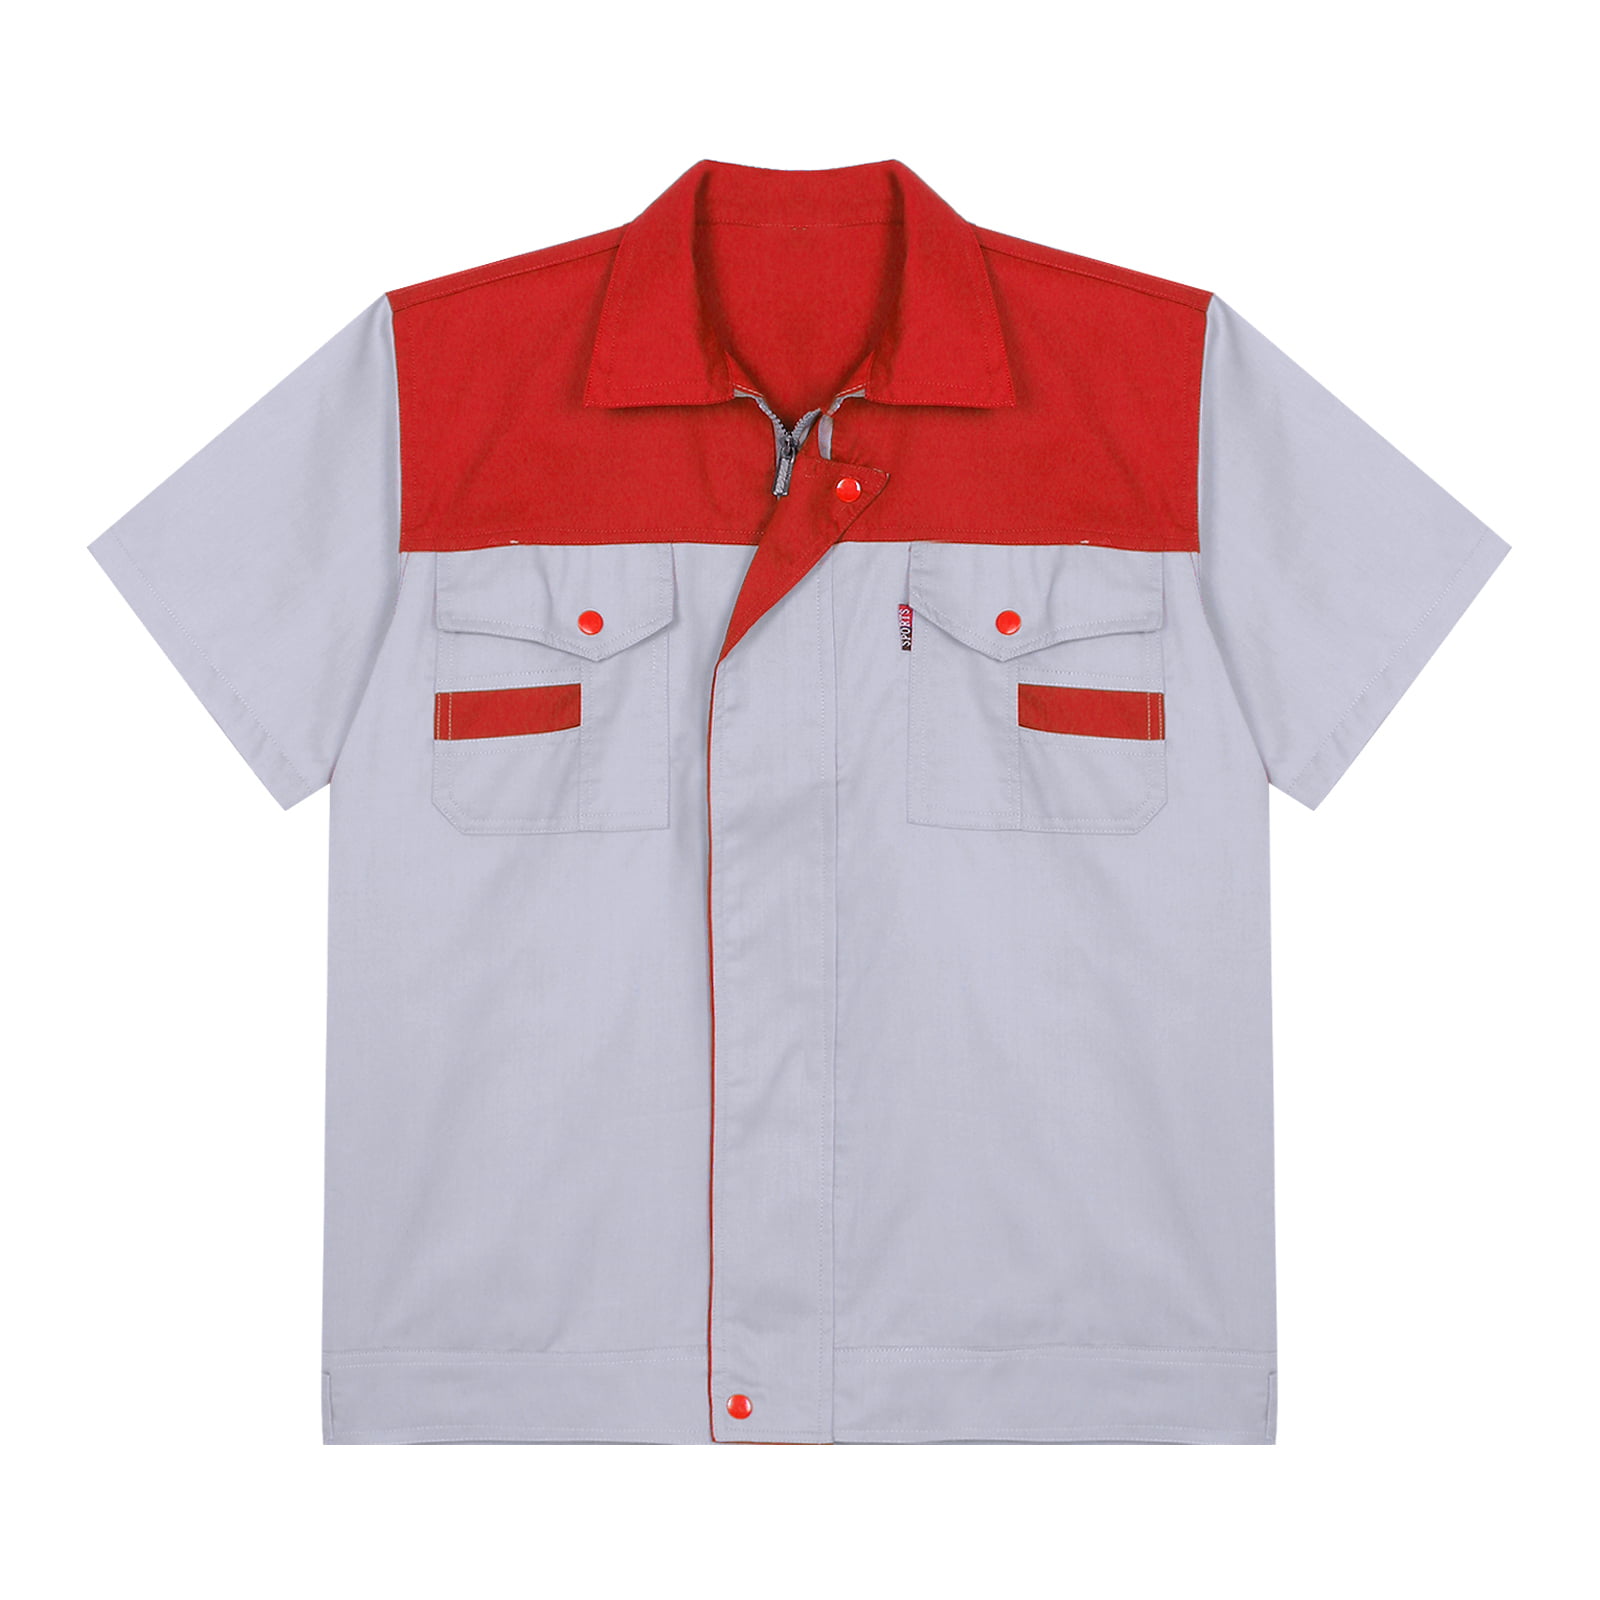 MSemis Men Color Block Work Shirt Short Sleeve Shop Shirt Motor Mechanic  Uniform Industrial T-shirts 